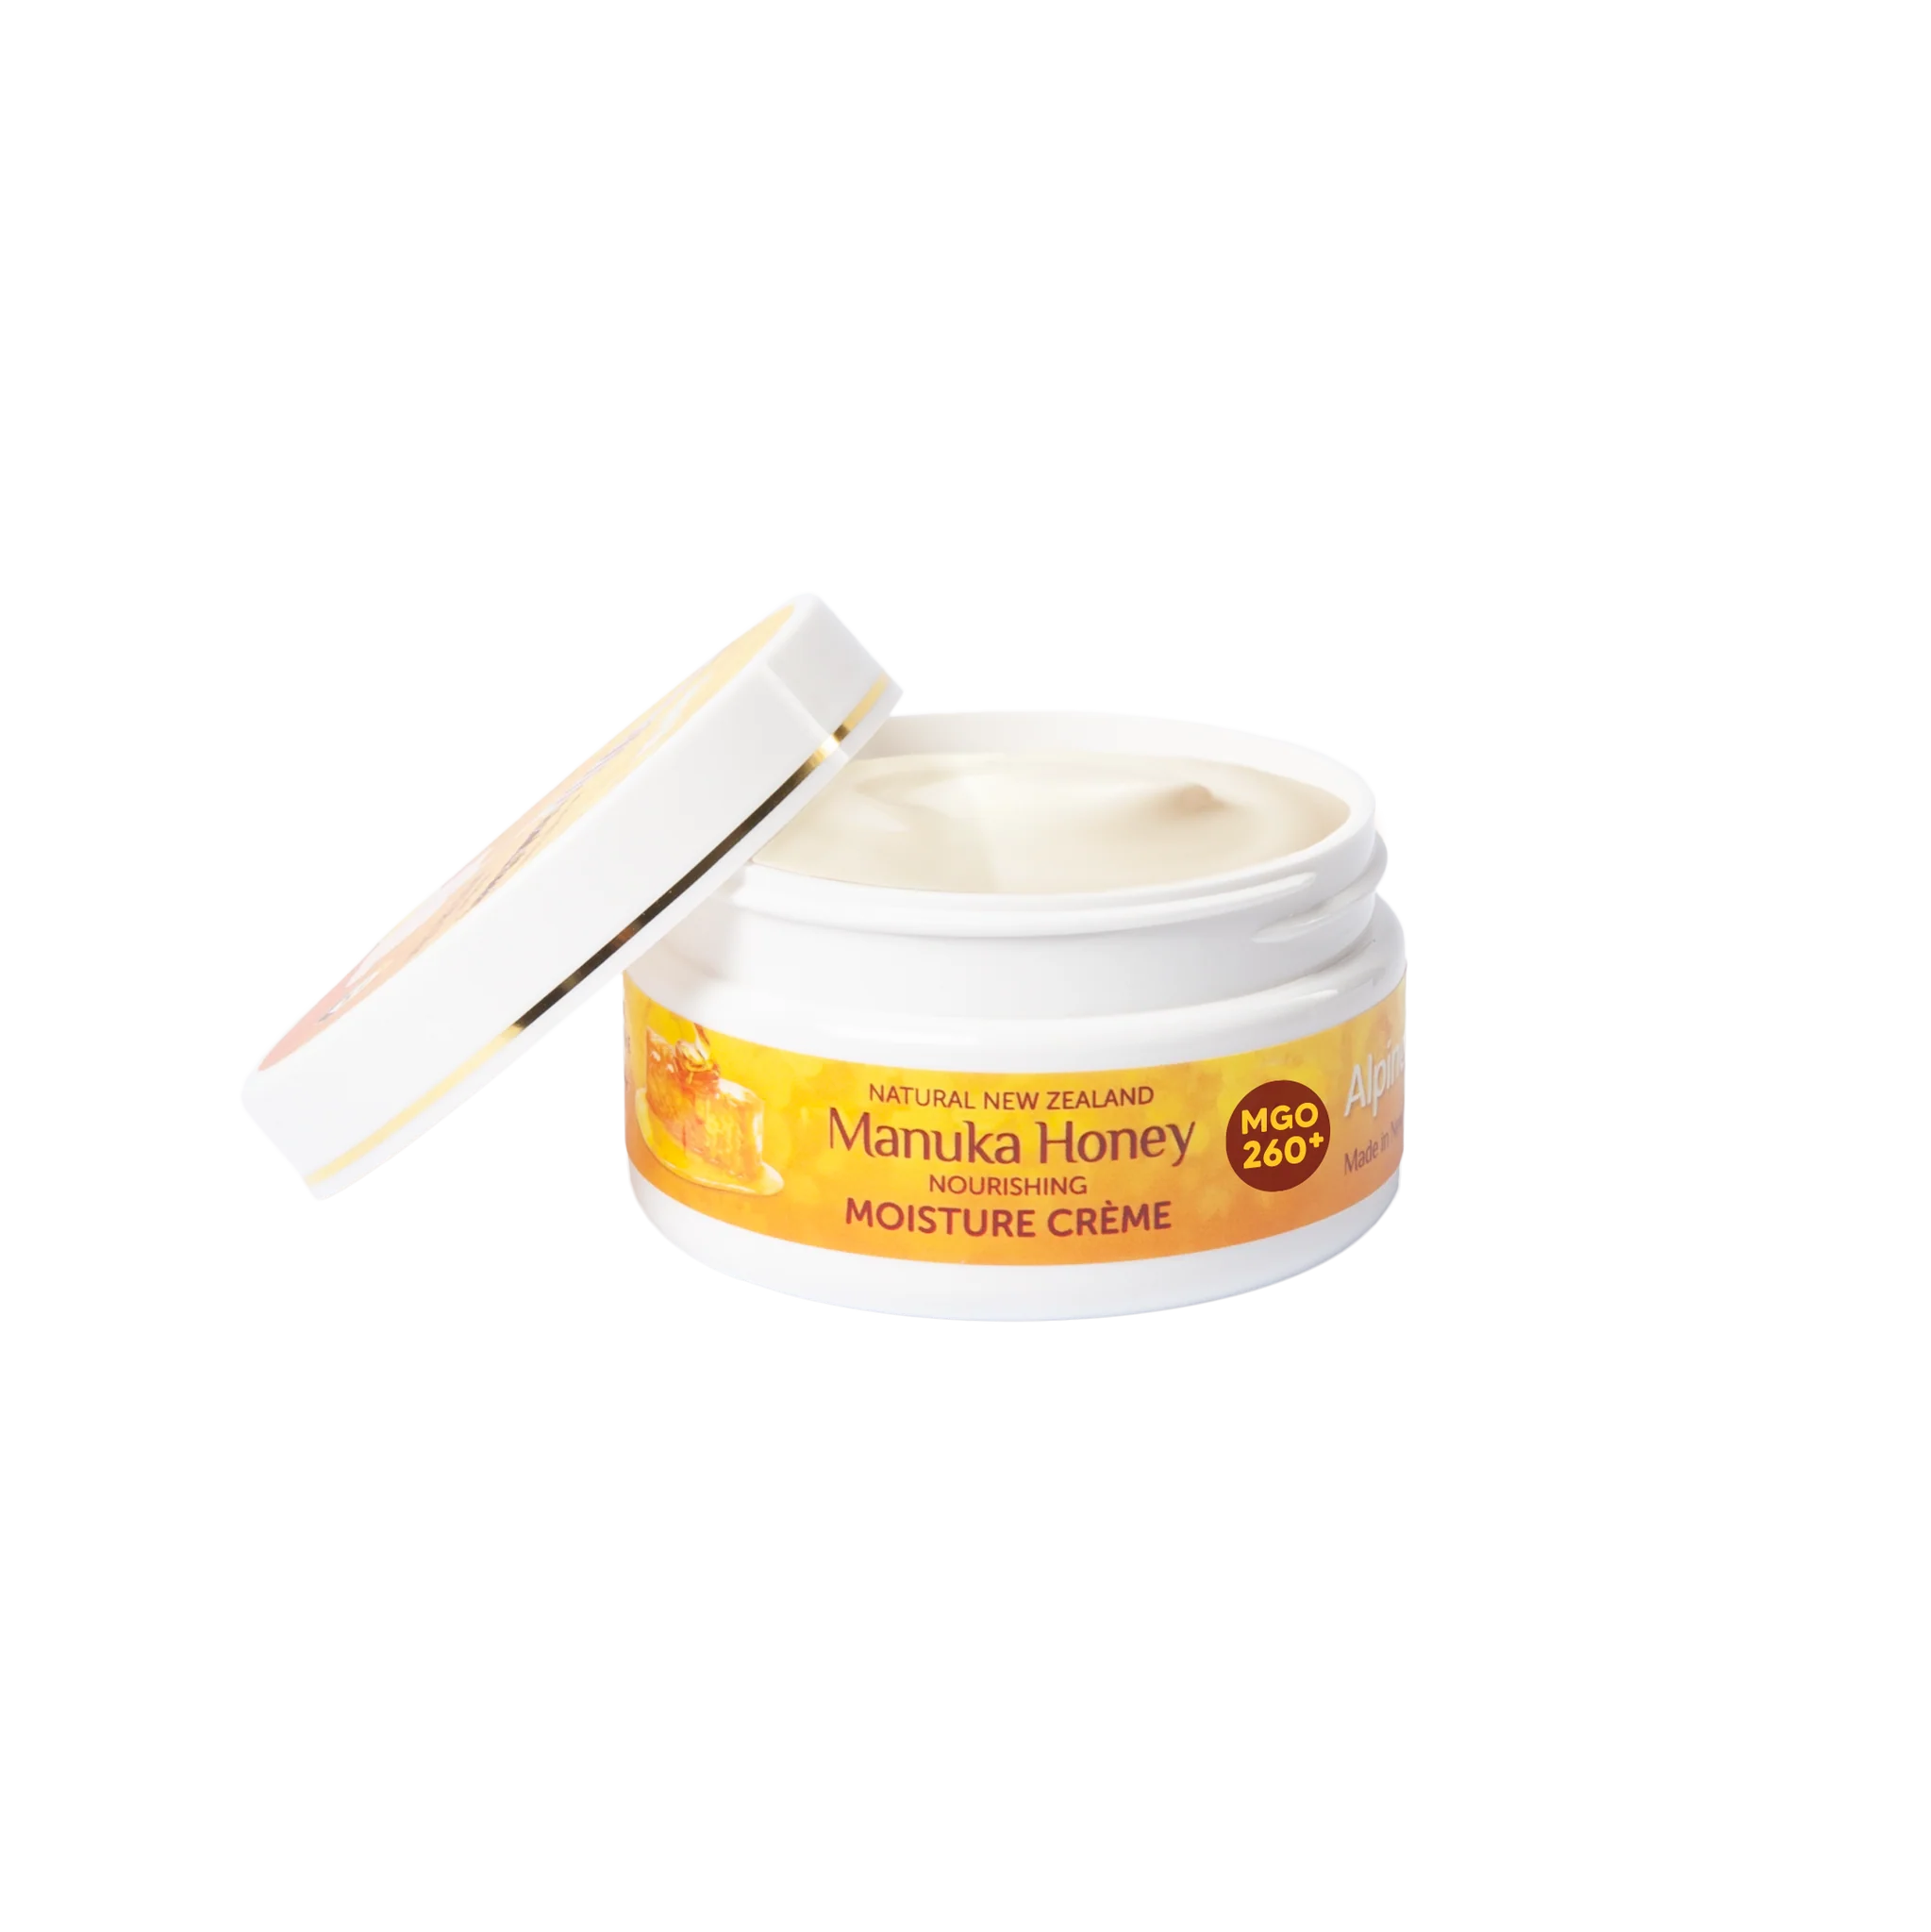 Alpine Silk Manuka Honey Moisture Cream 100g